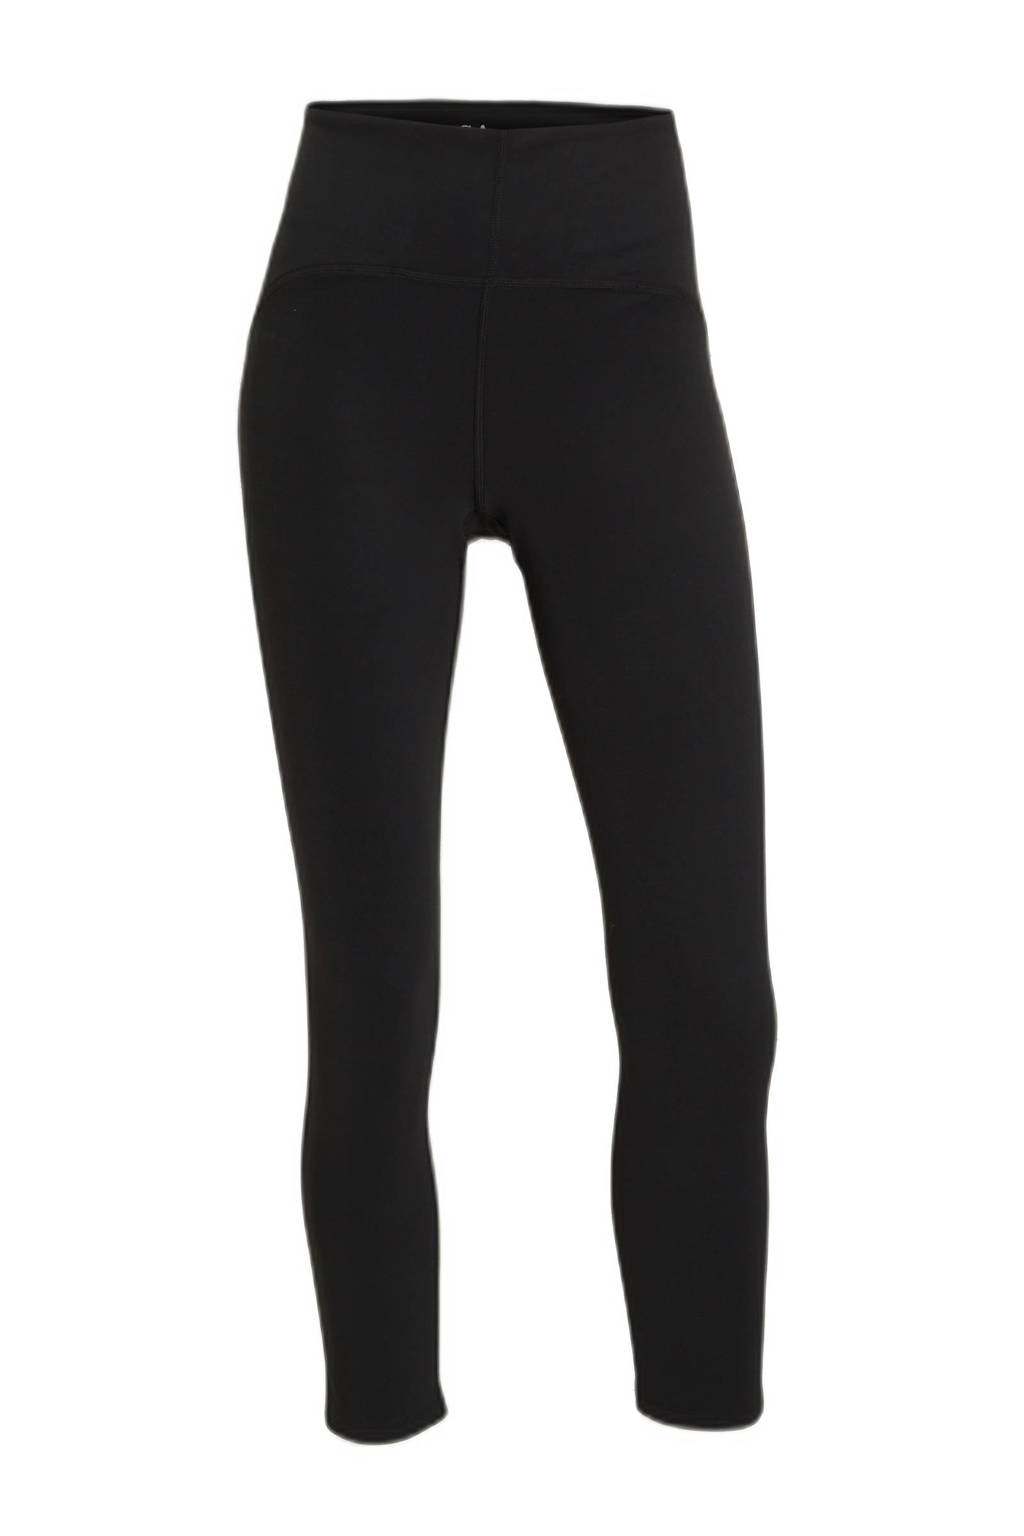 Zwarte dames C&A 7 8 sportlegging van nylon met slim fit, high waist en elastische tailleband